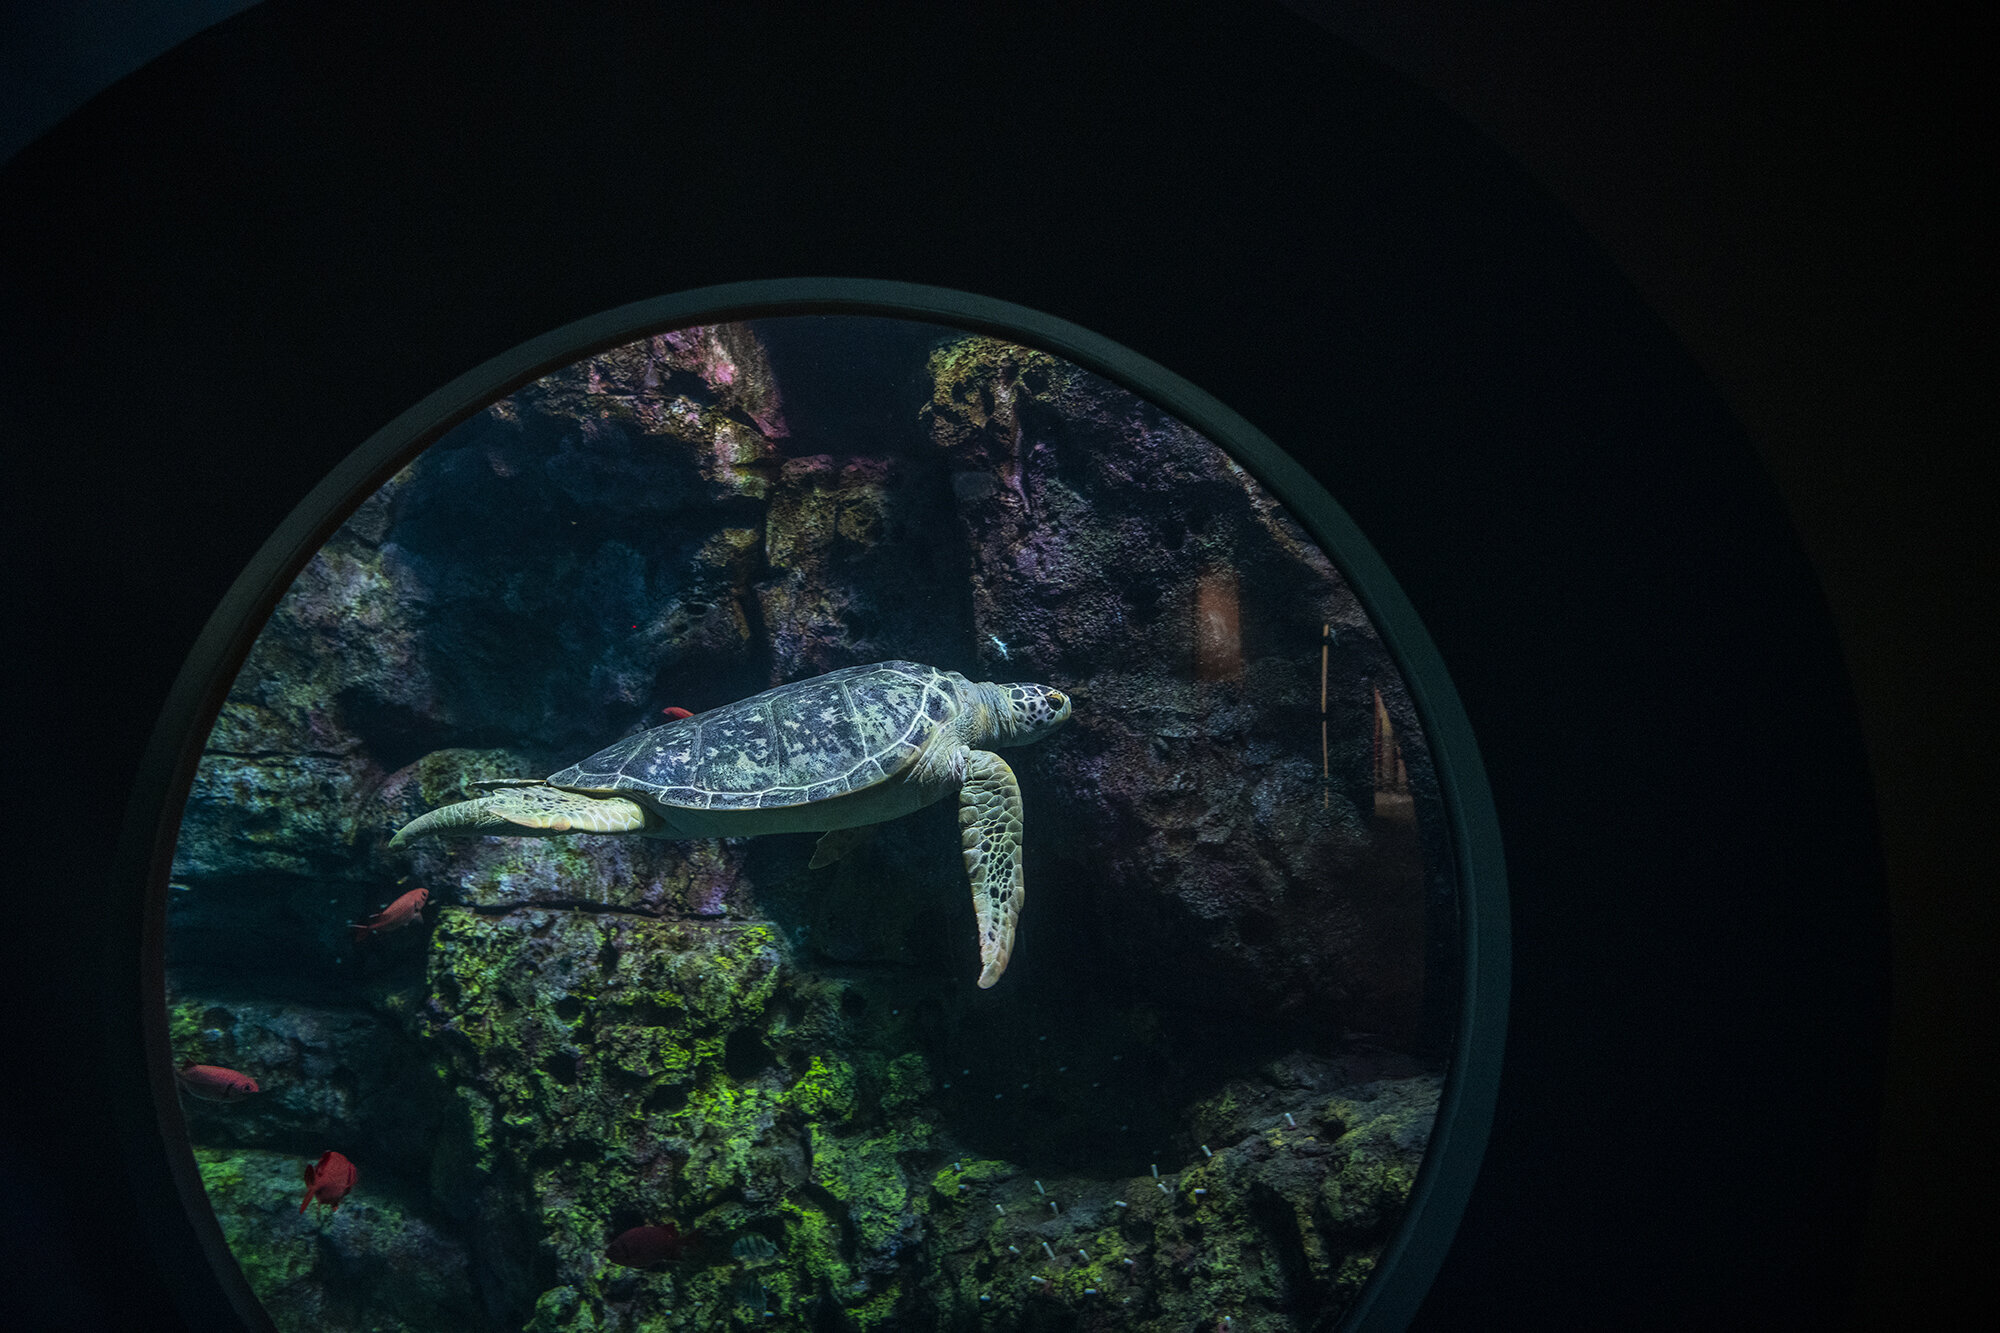  Sea turtle Bruno swims through Baja Bay on June 15, 2020, at Point Defiance Zoo &amp; Aquarium. 